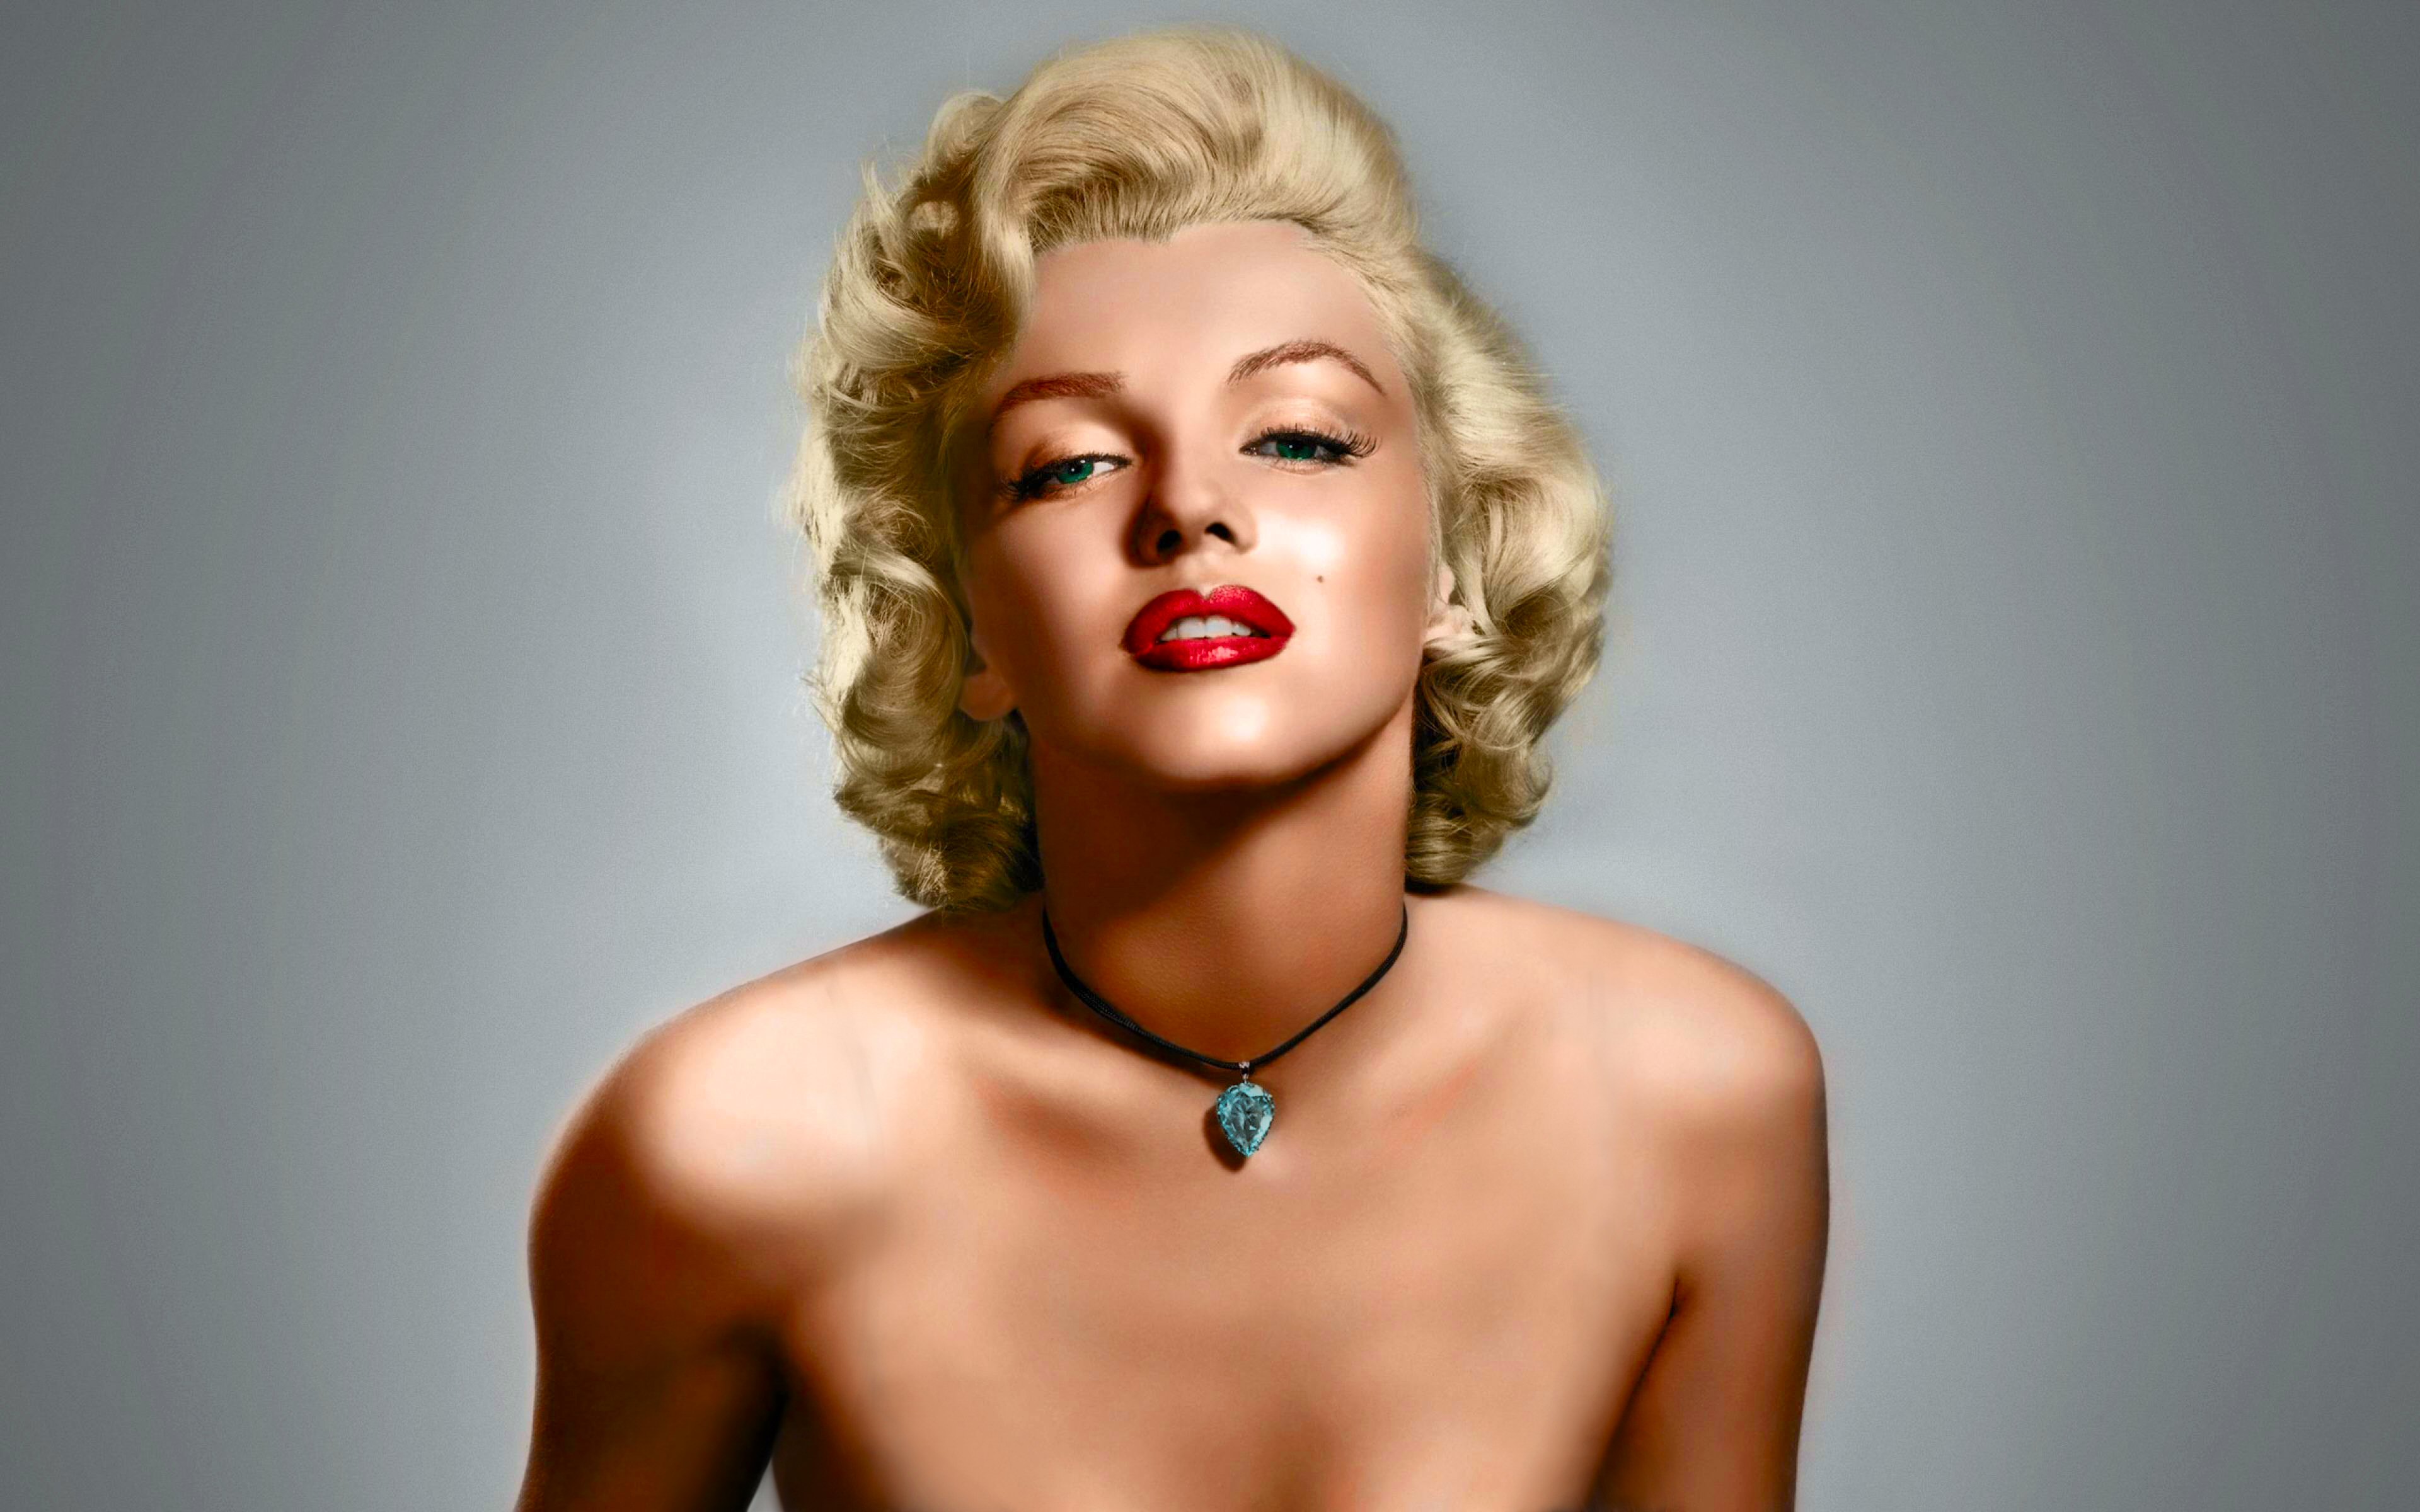 Marilyn Monroe HD Wallpaper Background Image